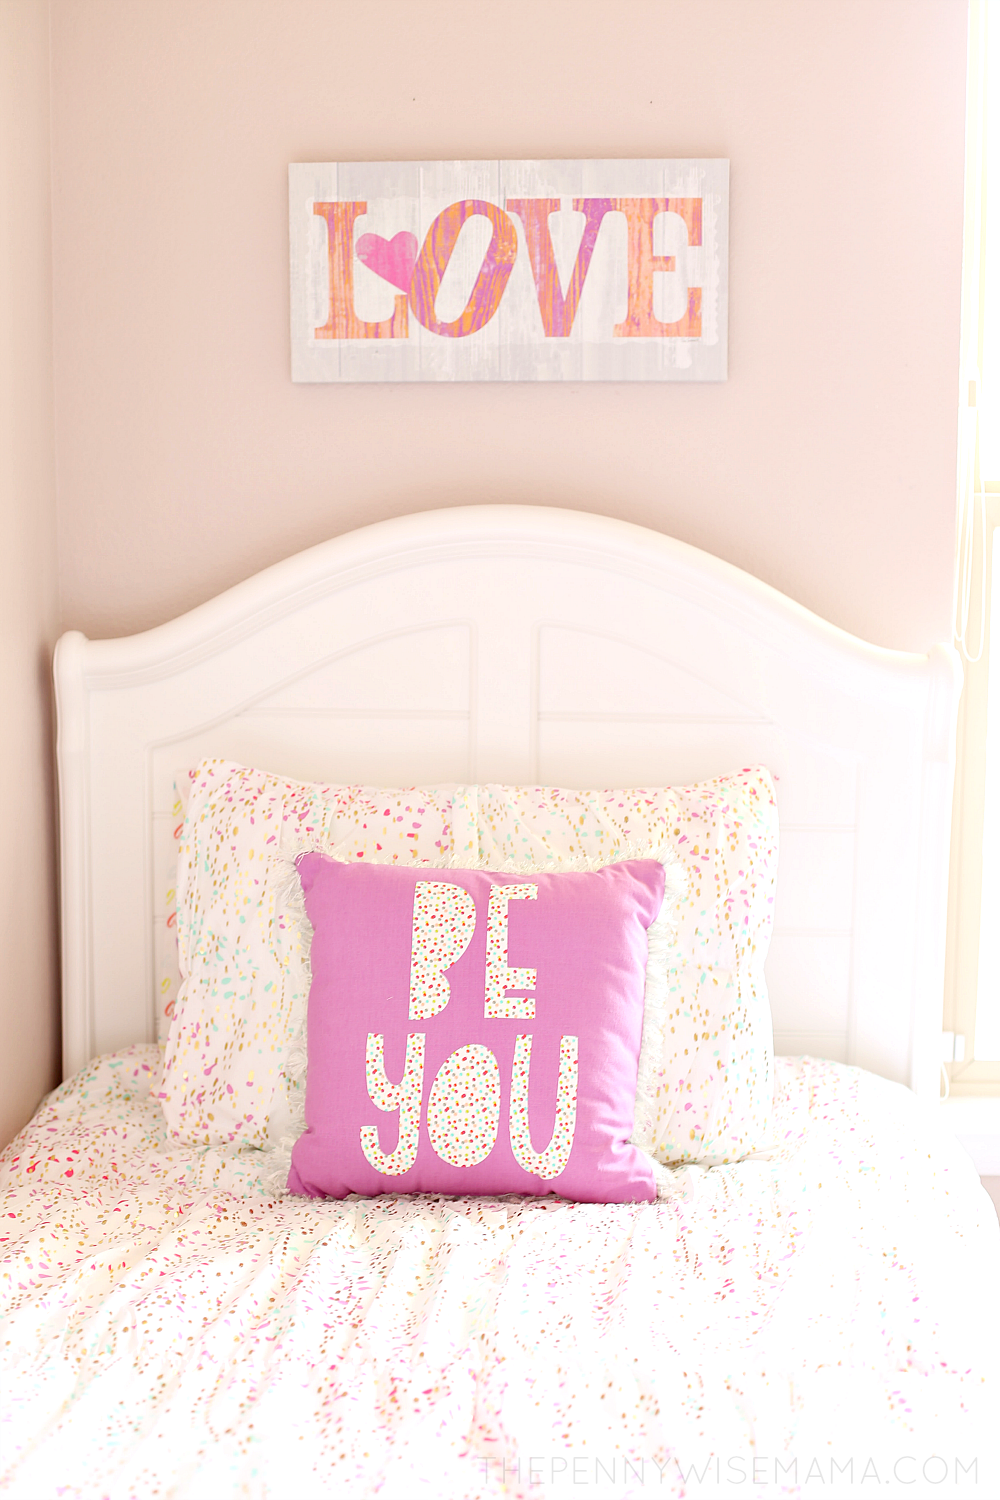 Tween Girl Bedroom Ideas - Adrian Sleigh Bed from American Furniture Warehouse